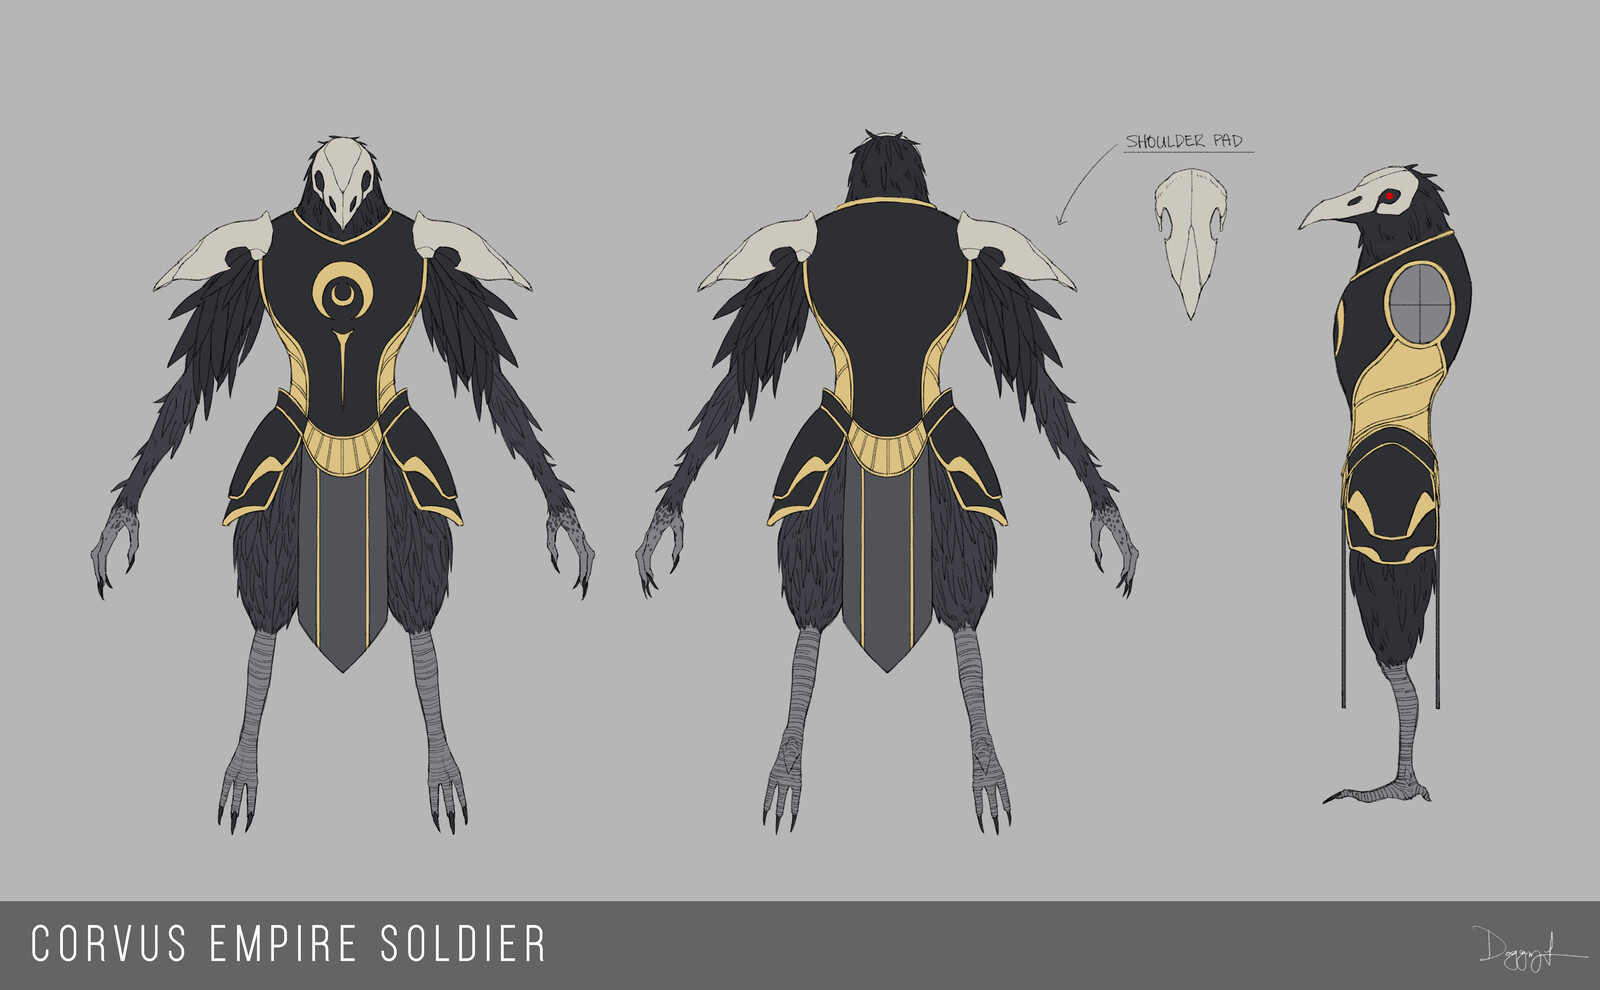 Corvus Empire soldier character sheet